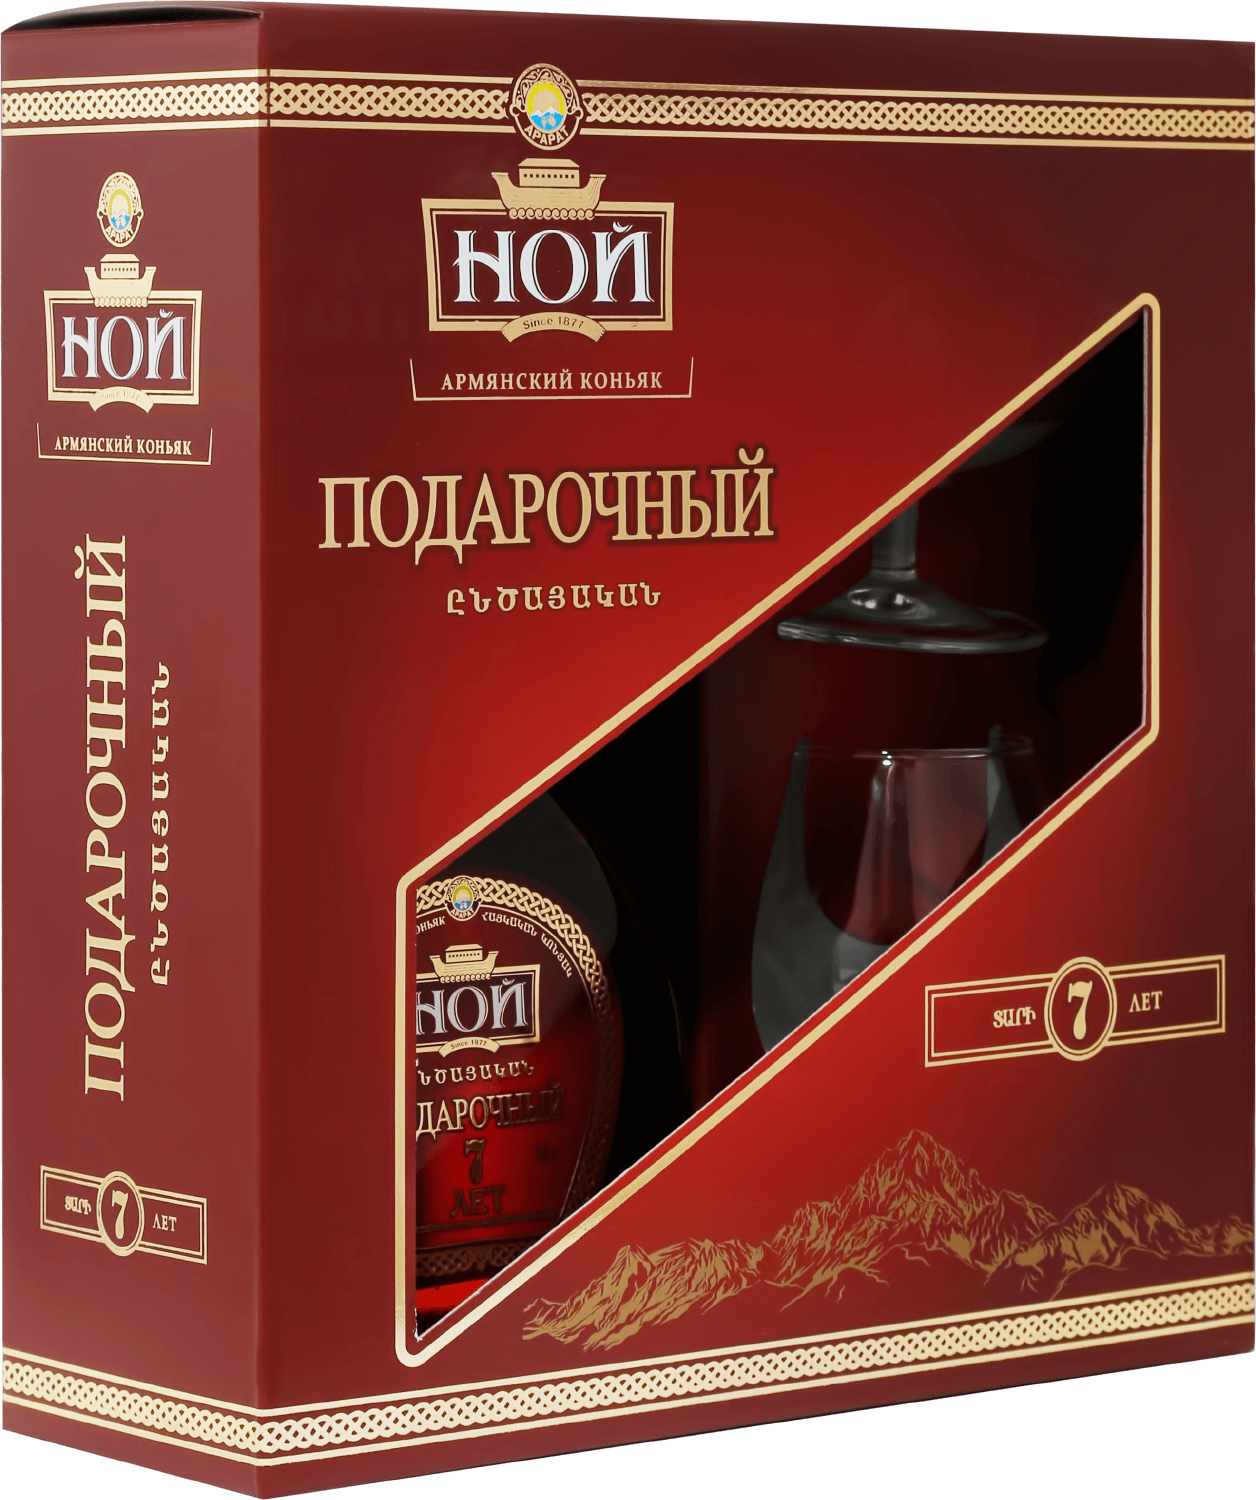 Noy Podarochniy Armenian Brandy 7 y.o. in gift box with two glasses